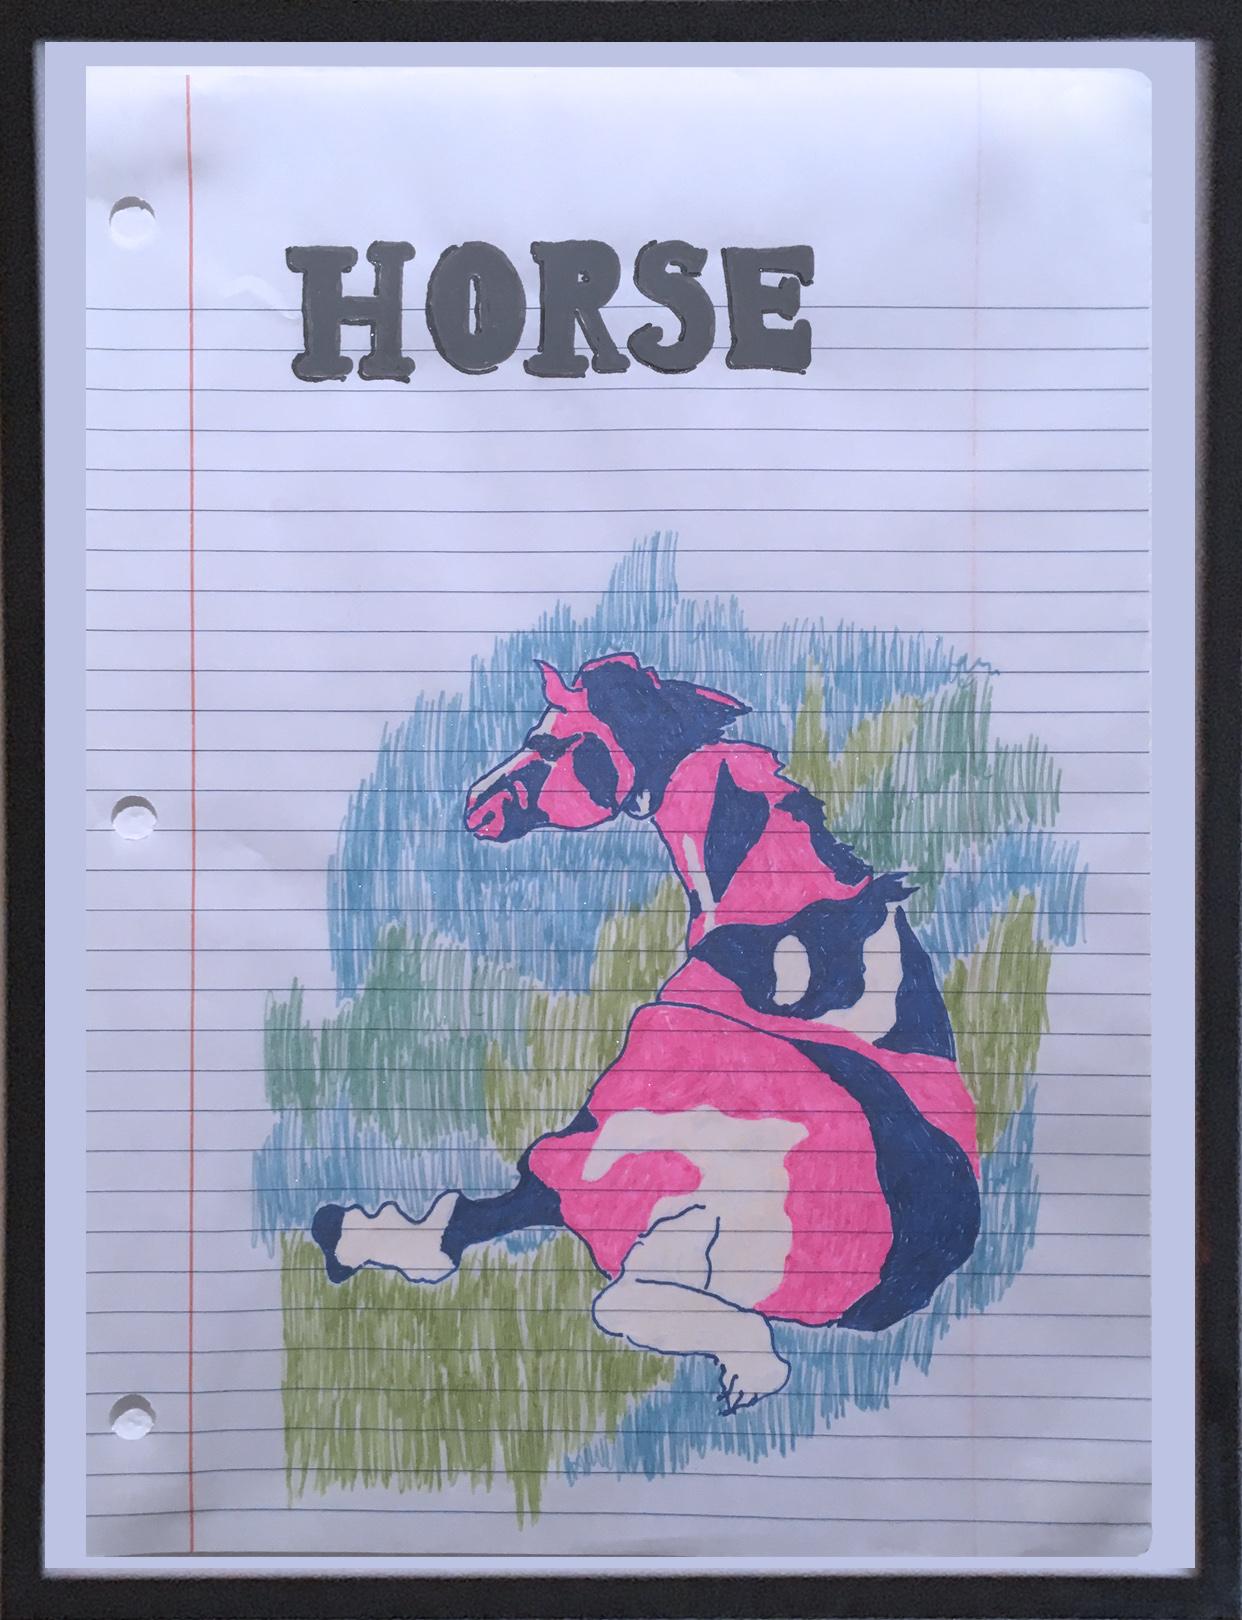 Horse, 2020, gel pen on paper, figurative, drawing, framed, pink, blue, white